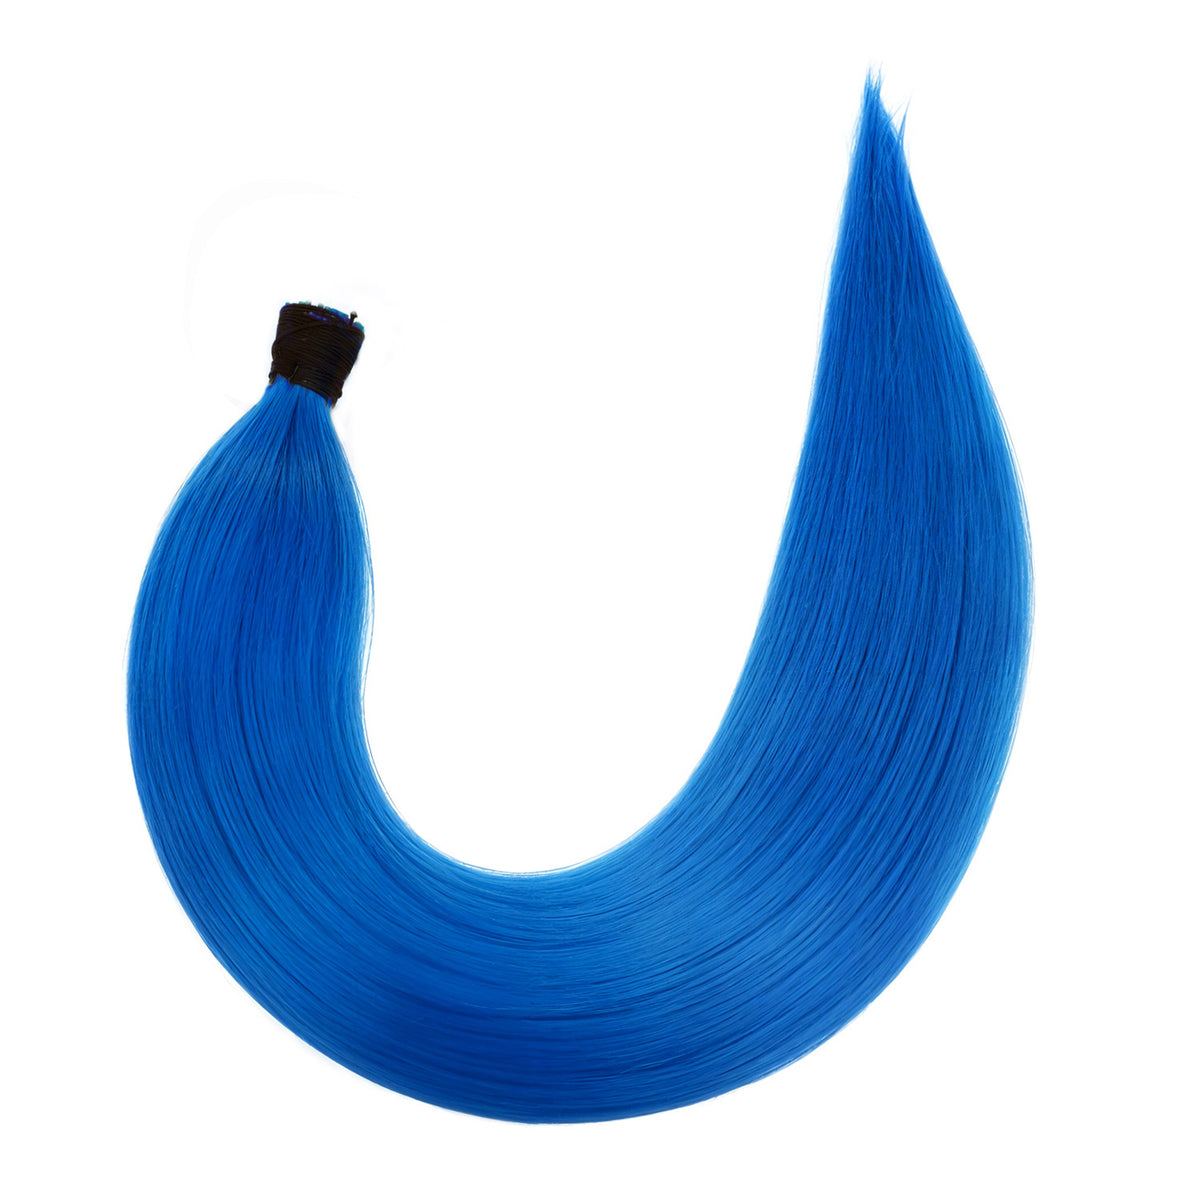 Blue Human Hair Extensions Natural 